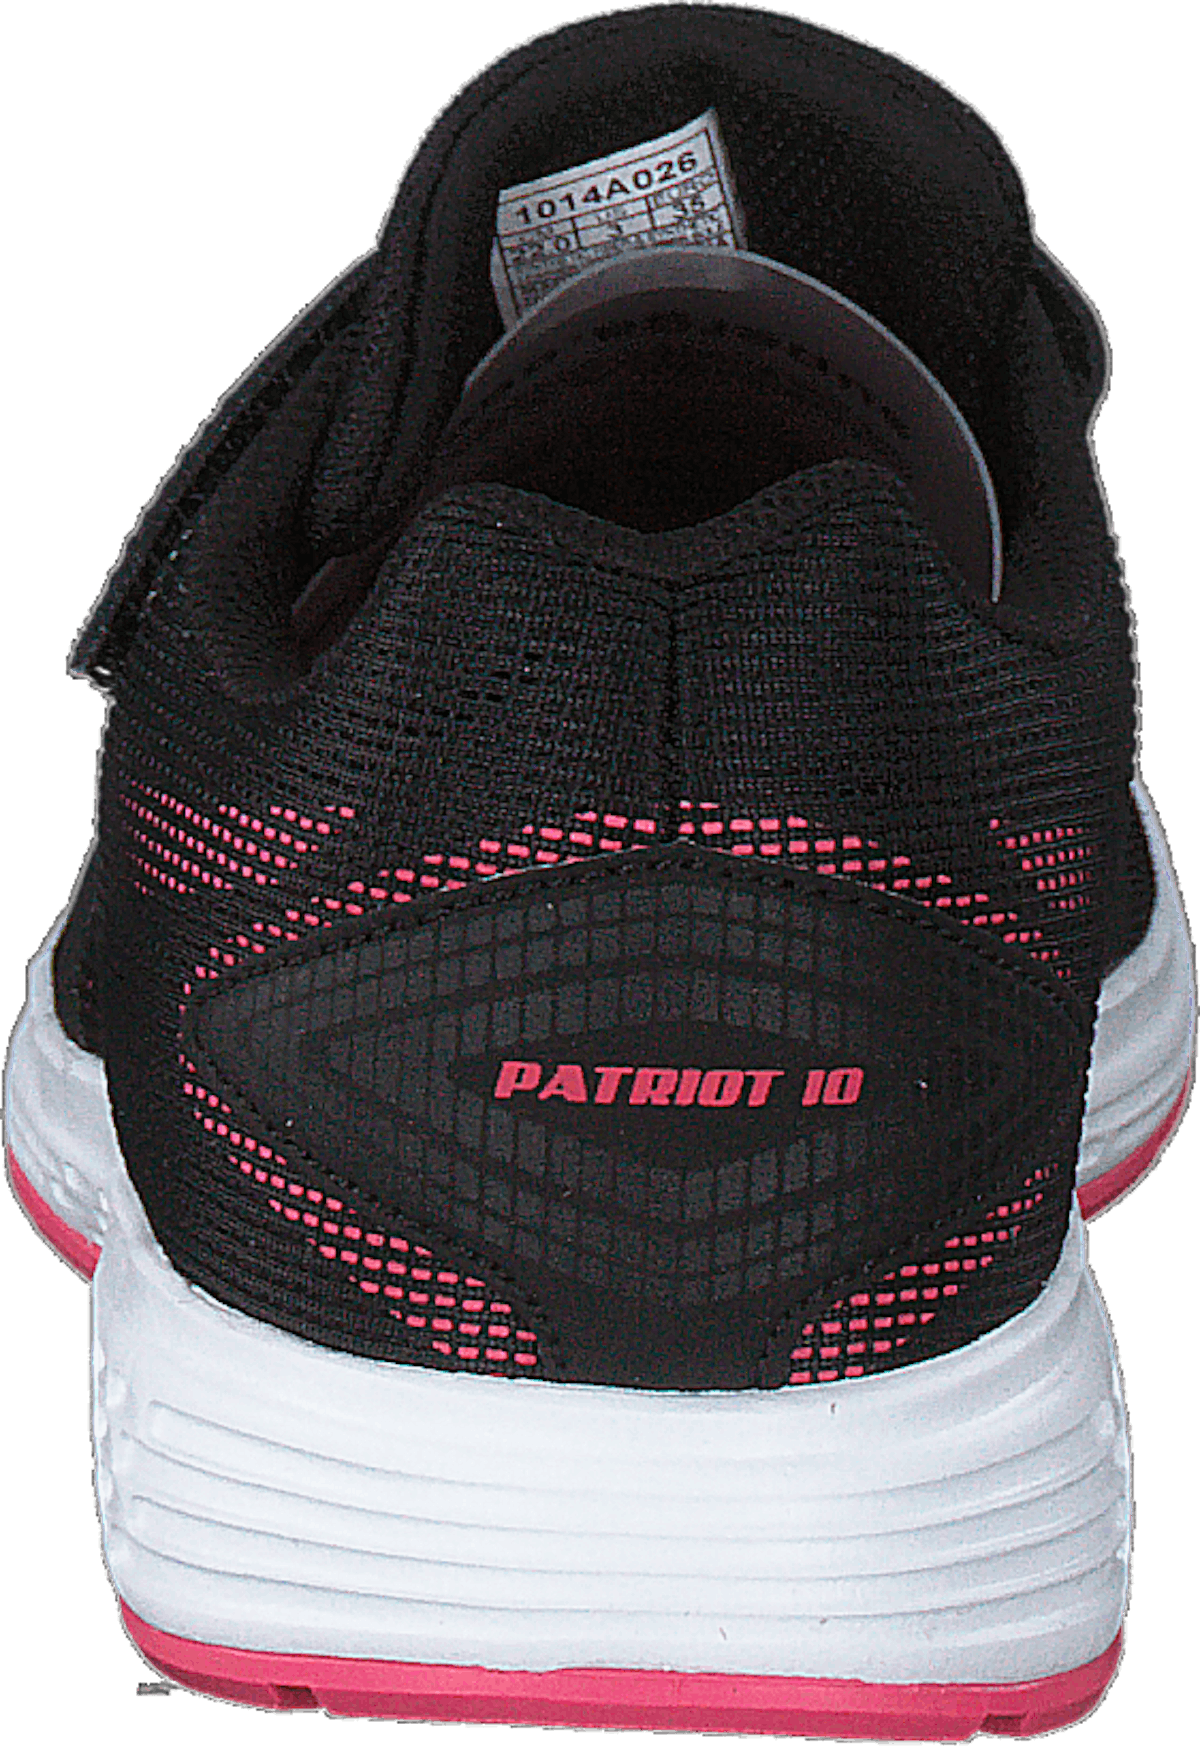 Patriot 10 Ps Black/pink Cameo